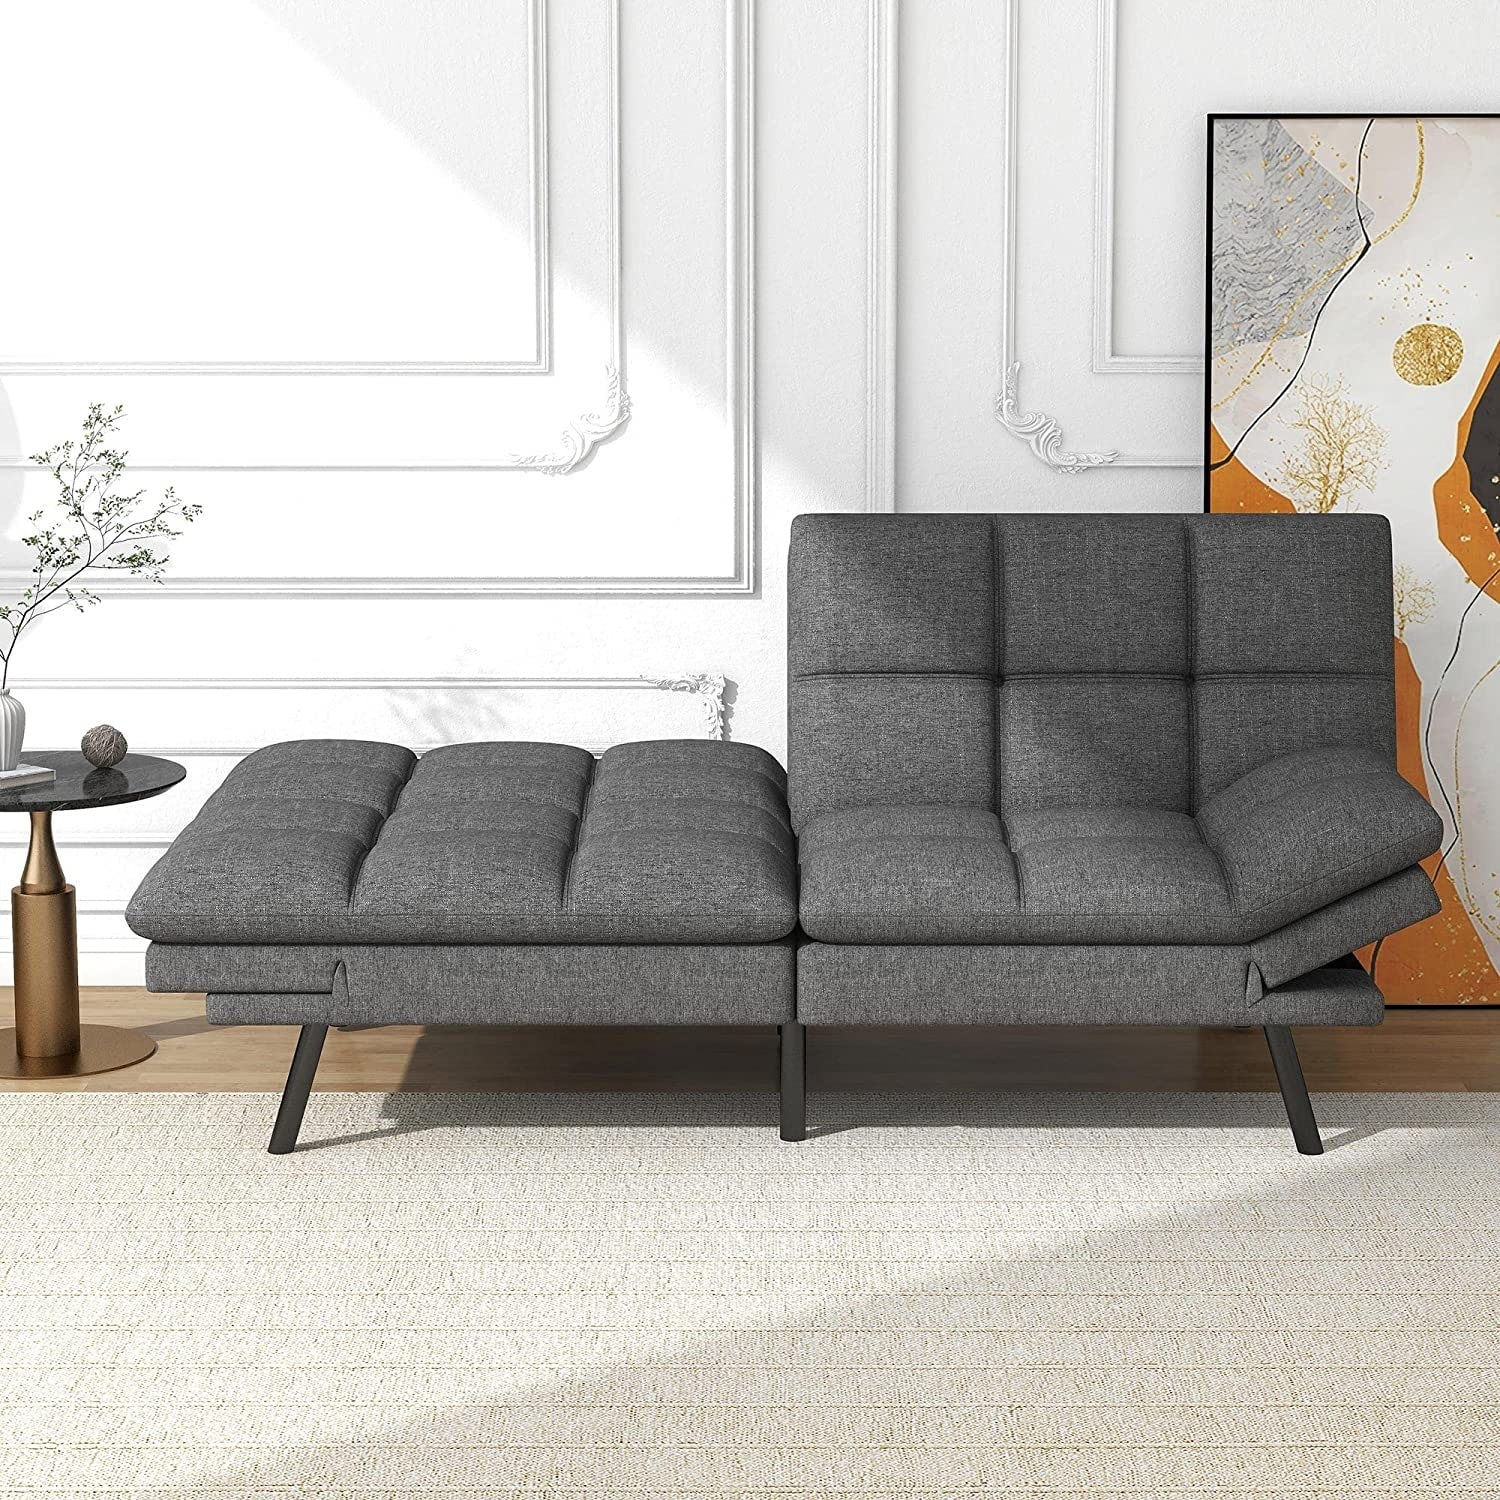 Milmonet Futon Sofa Bed, Linen Fabric Memory Foam Couch,Modern